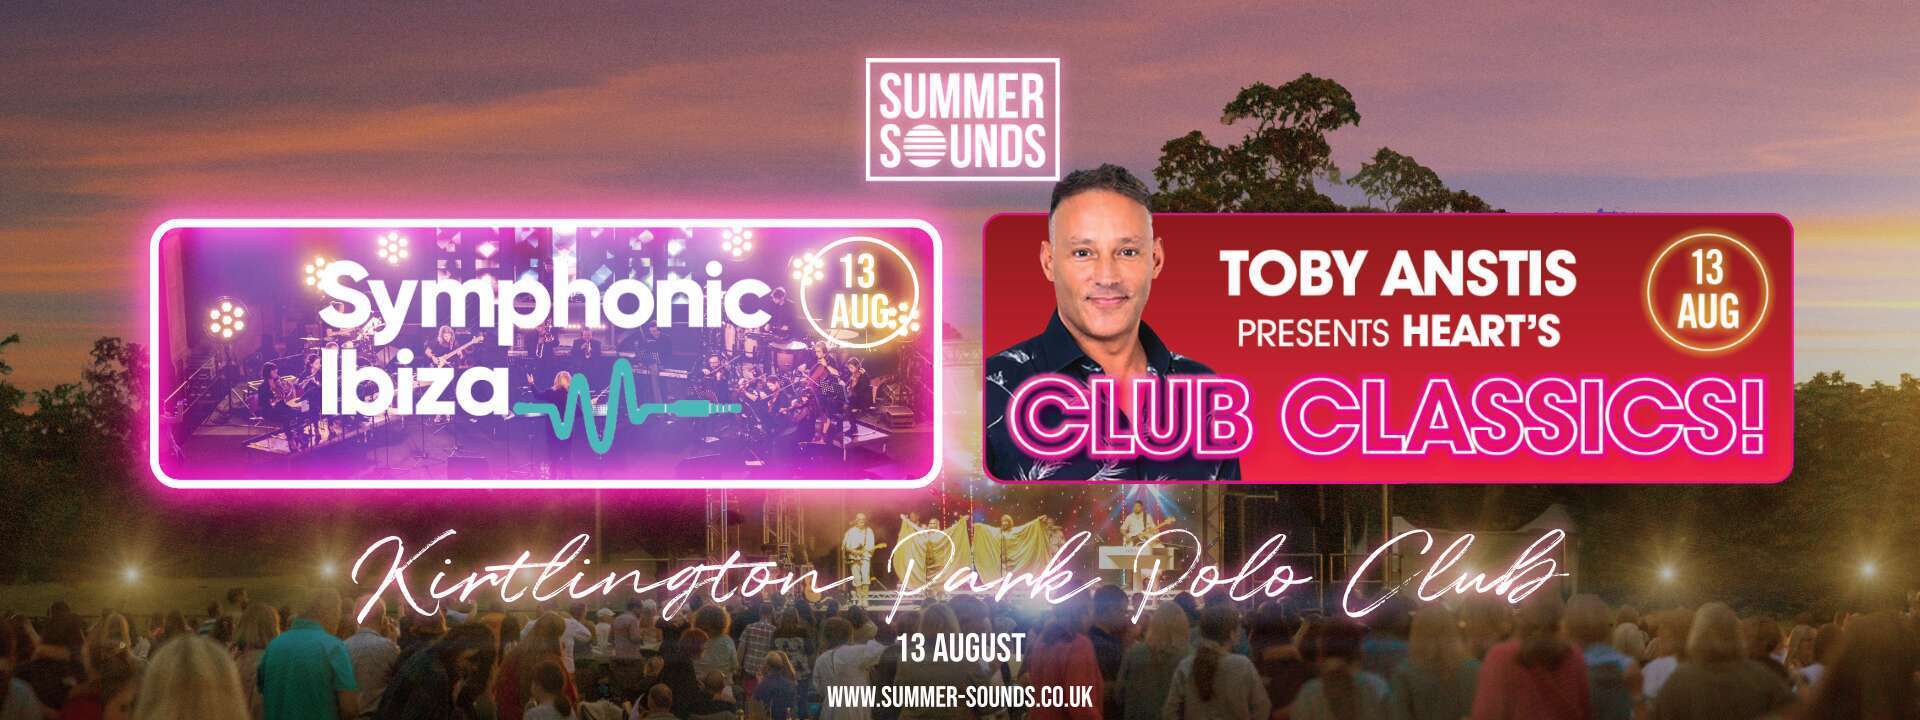 Summer Sounds Presents: Club Classics and Symphonic Ibiza, Kidlington, Oxfordshire,England,United Kingdom